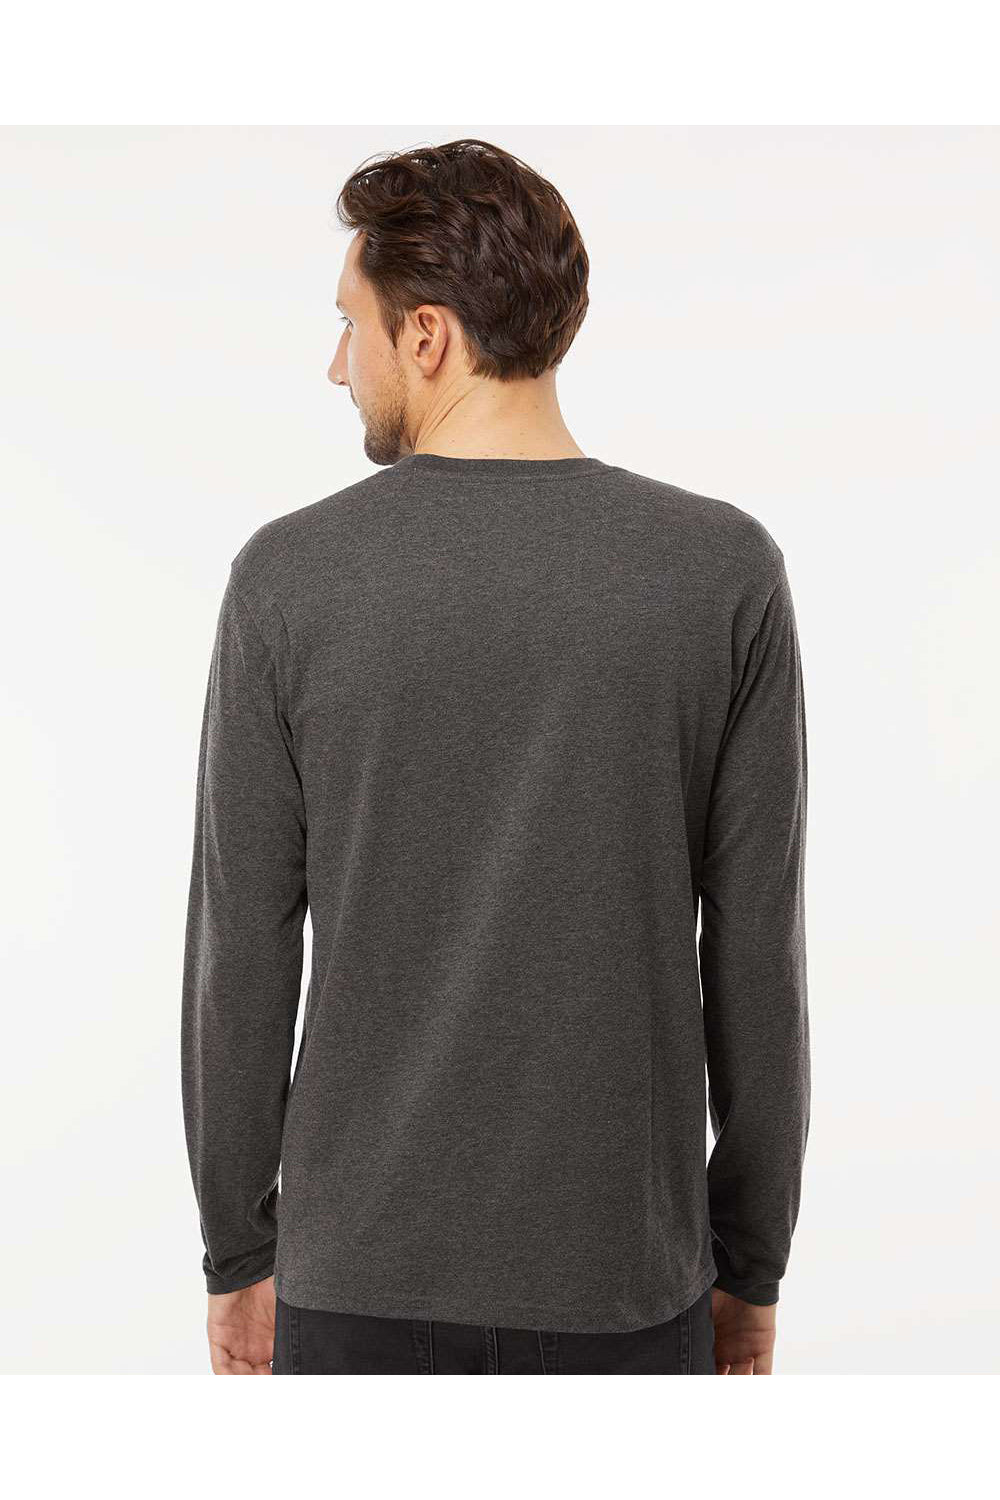 Kastlfel 2016 Mens RecycledSoft Long Sleeve Crewneck T-Shirt Carbon Grey Model Back